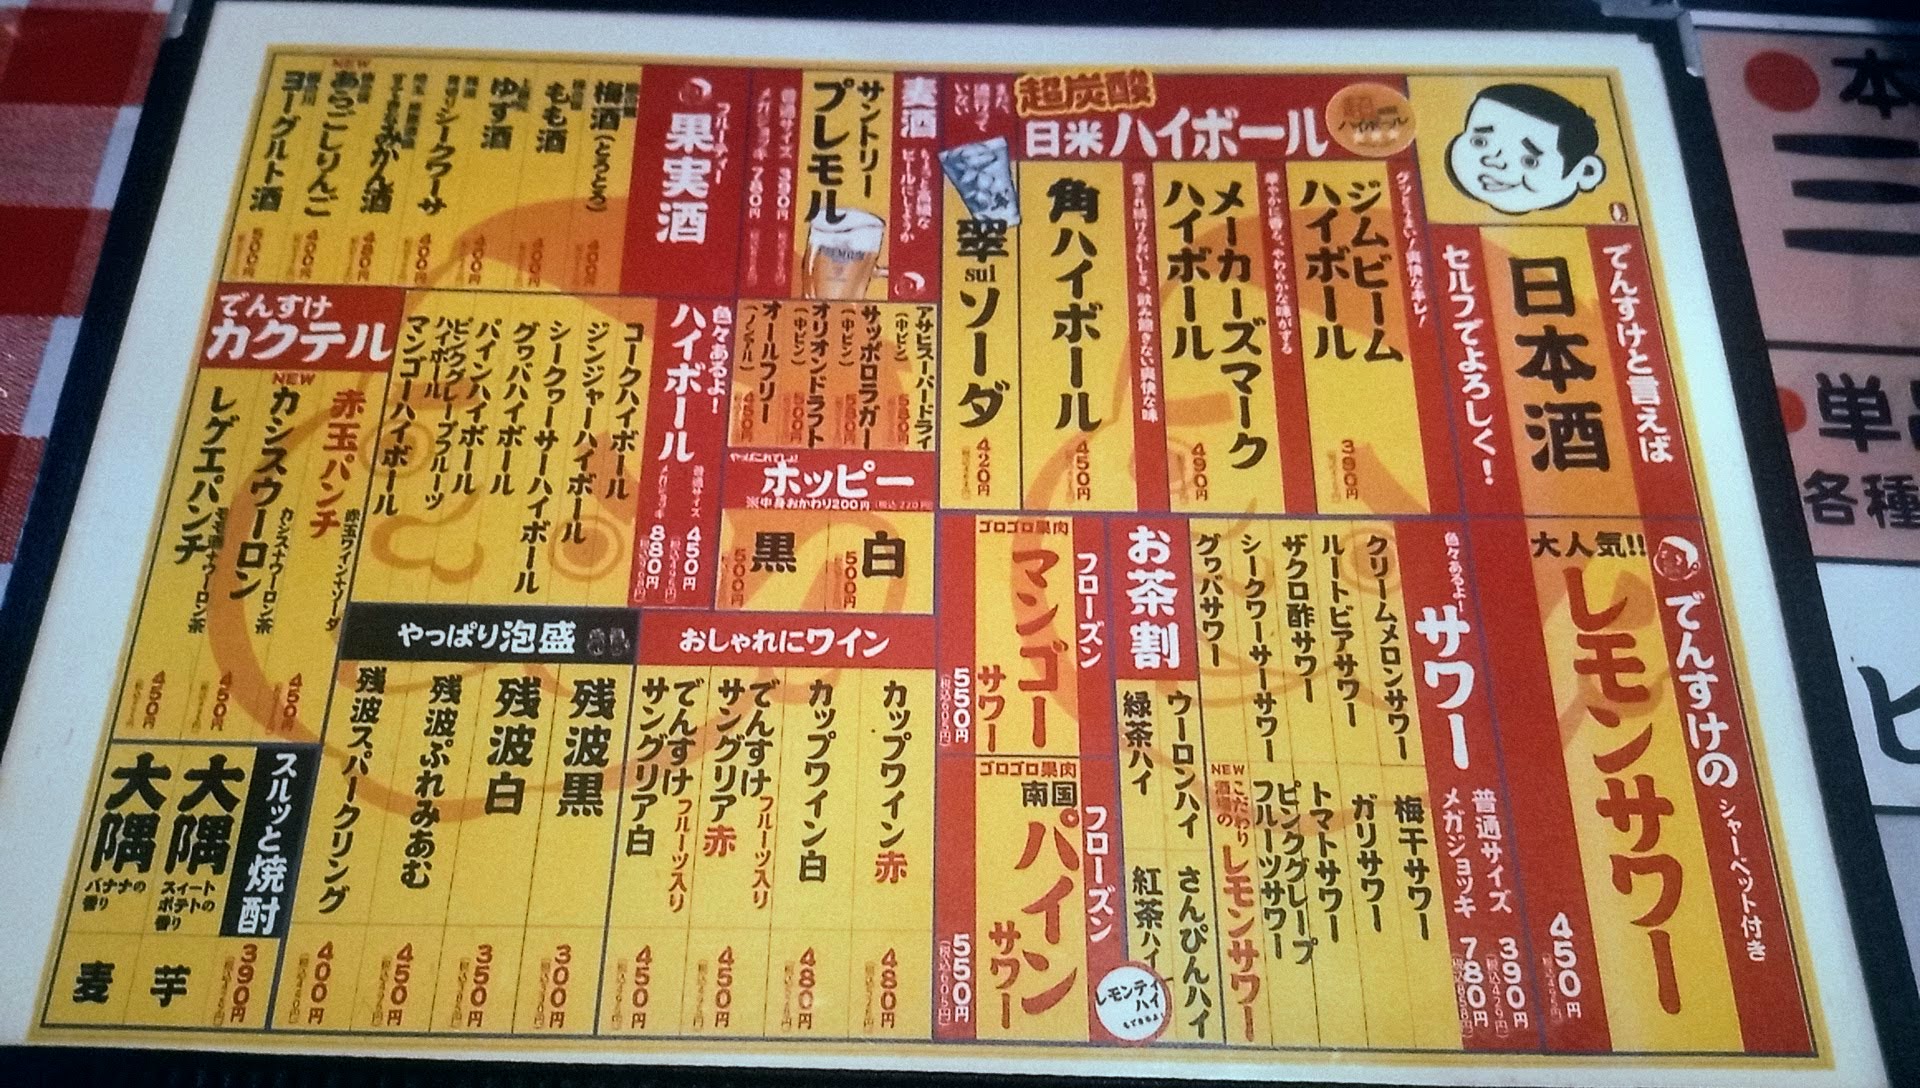 the food and drink menu of Densuke Shouten 2